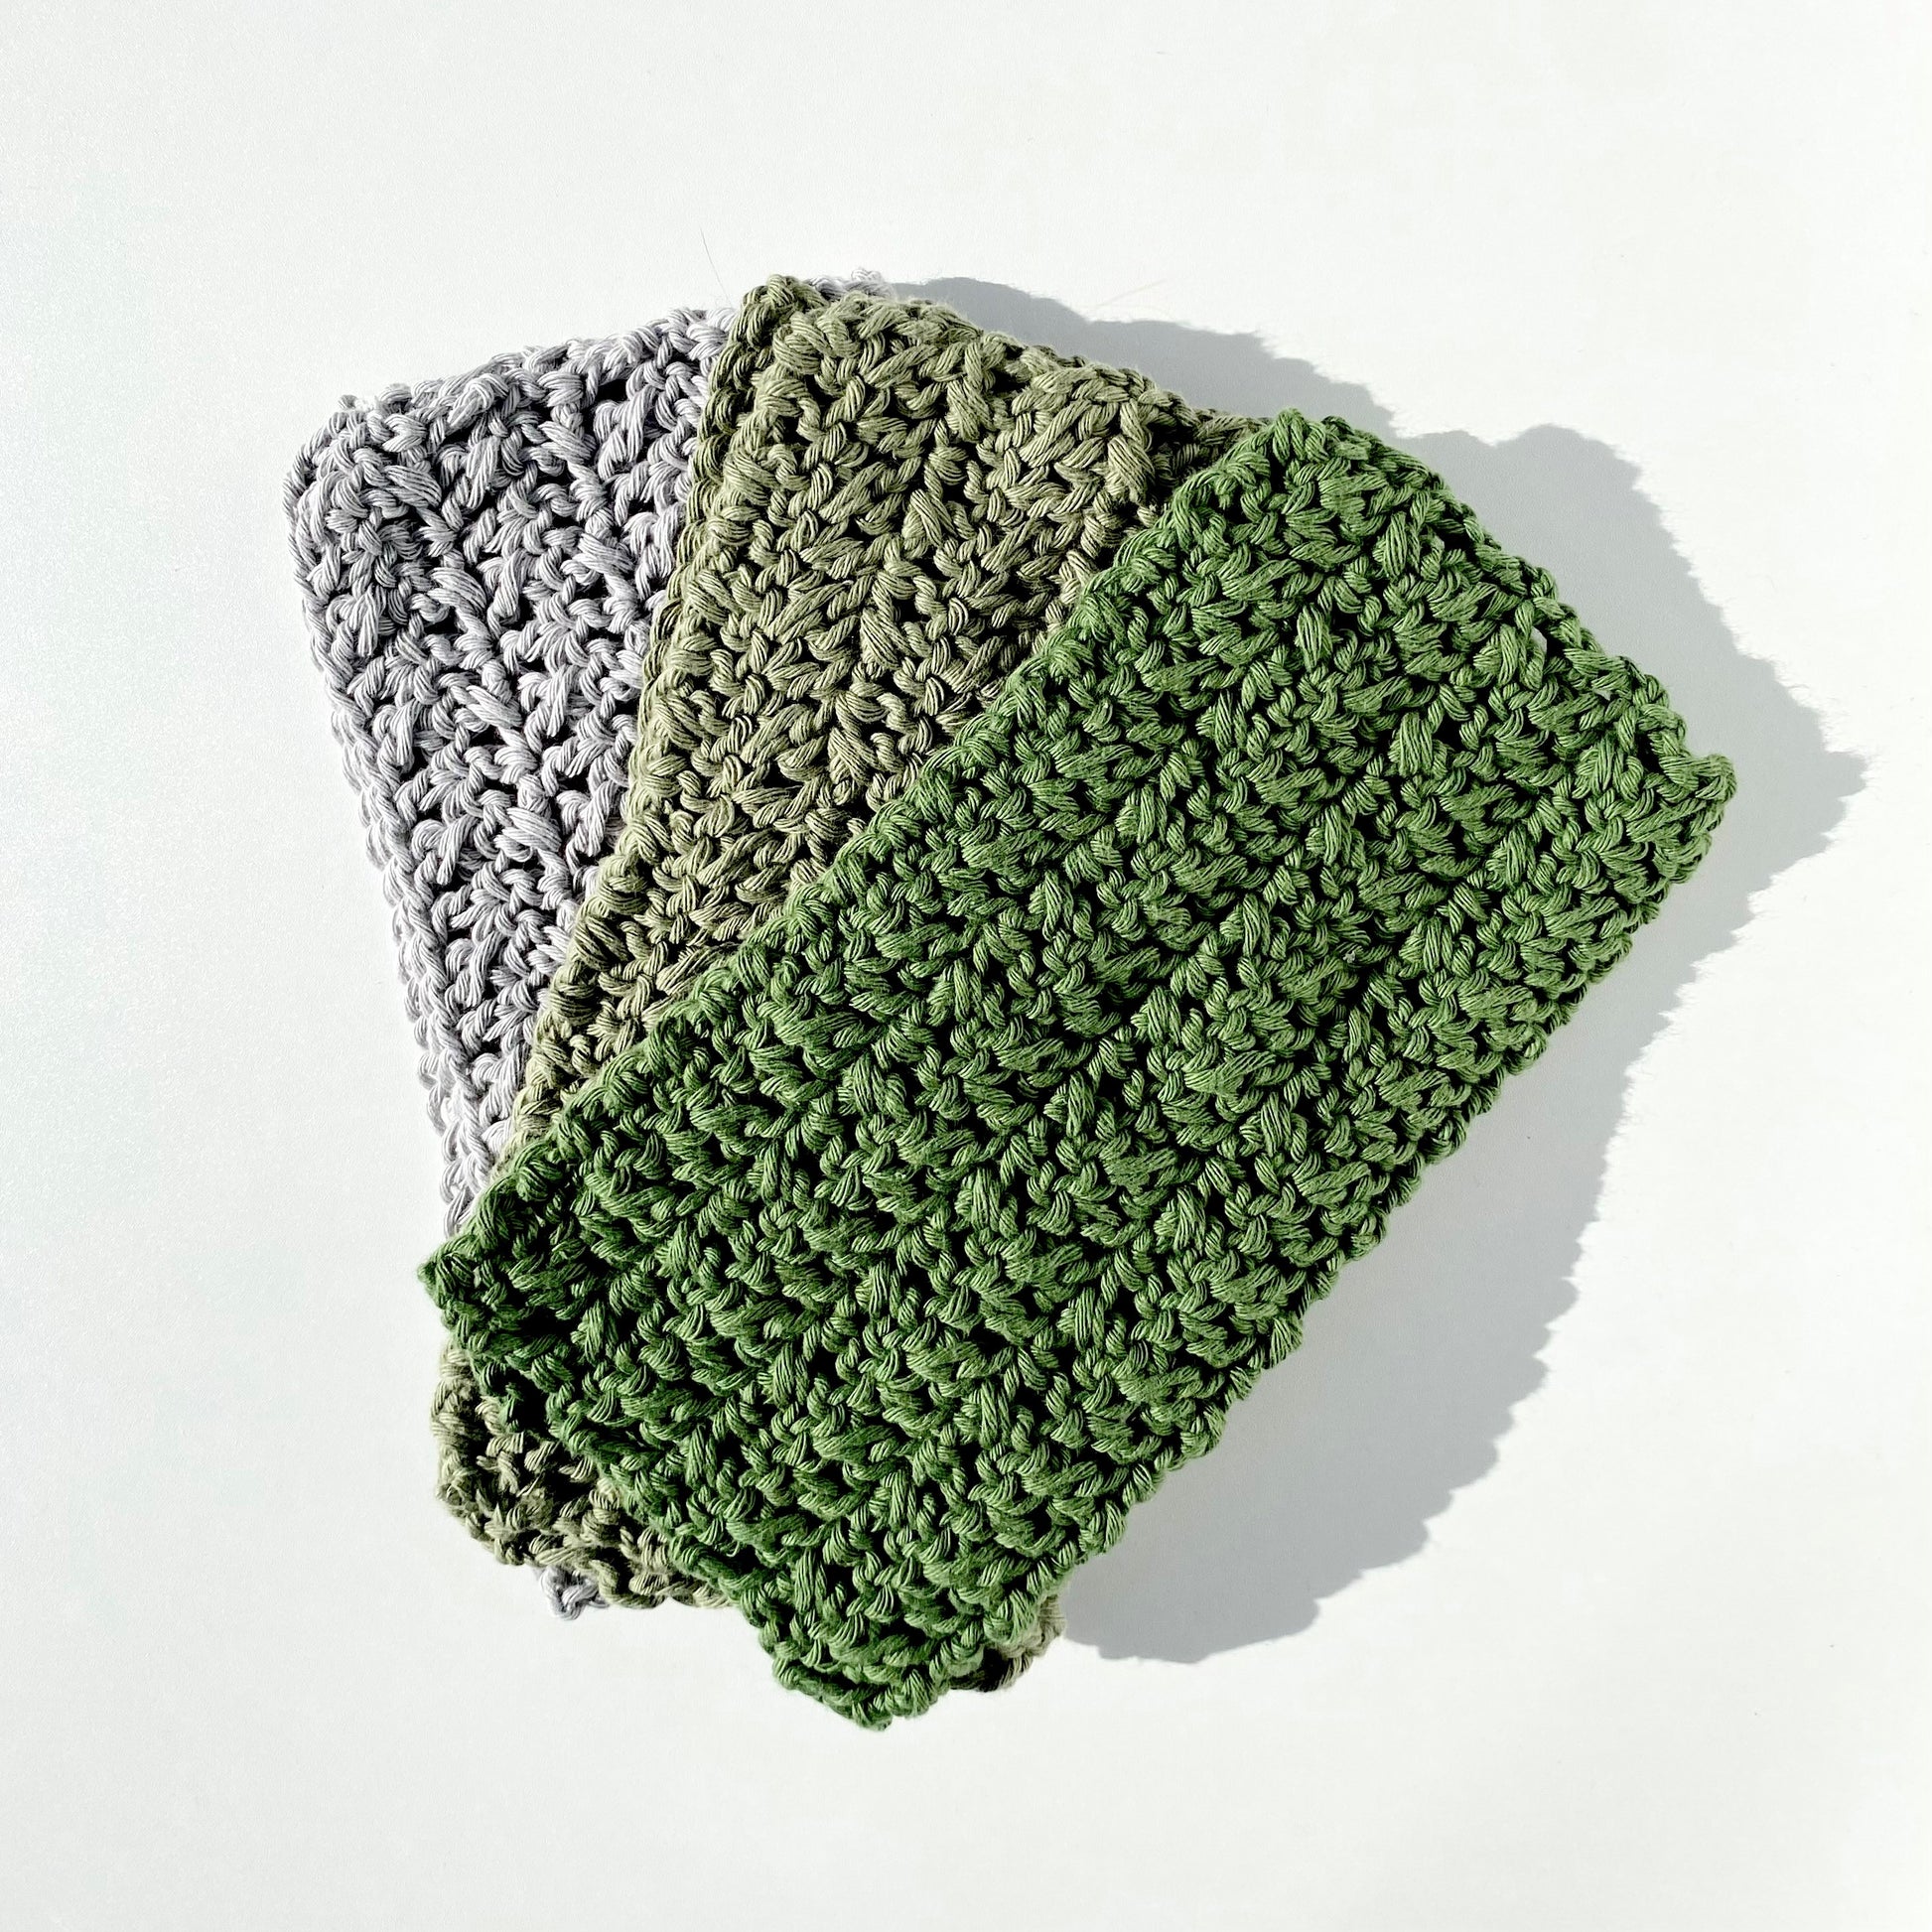 Crochet Cleaning Cloths - 3 pack - veto. zerowaste